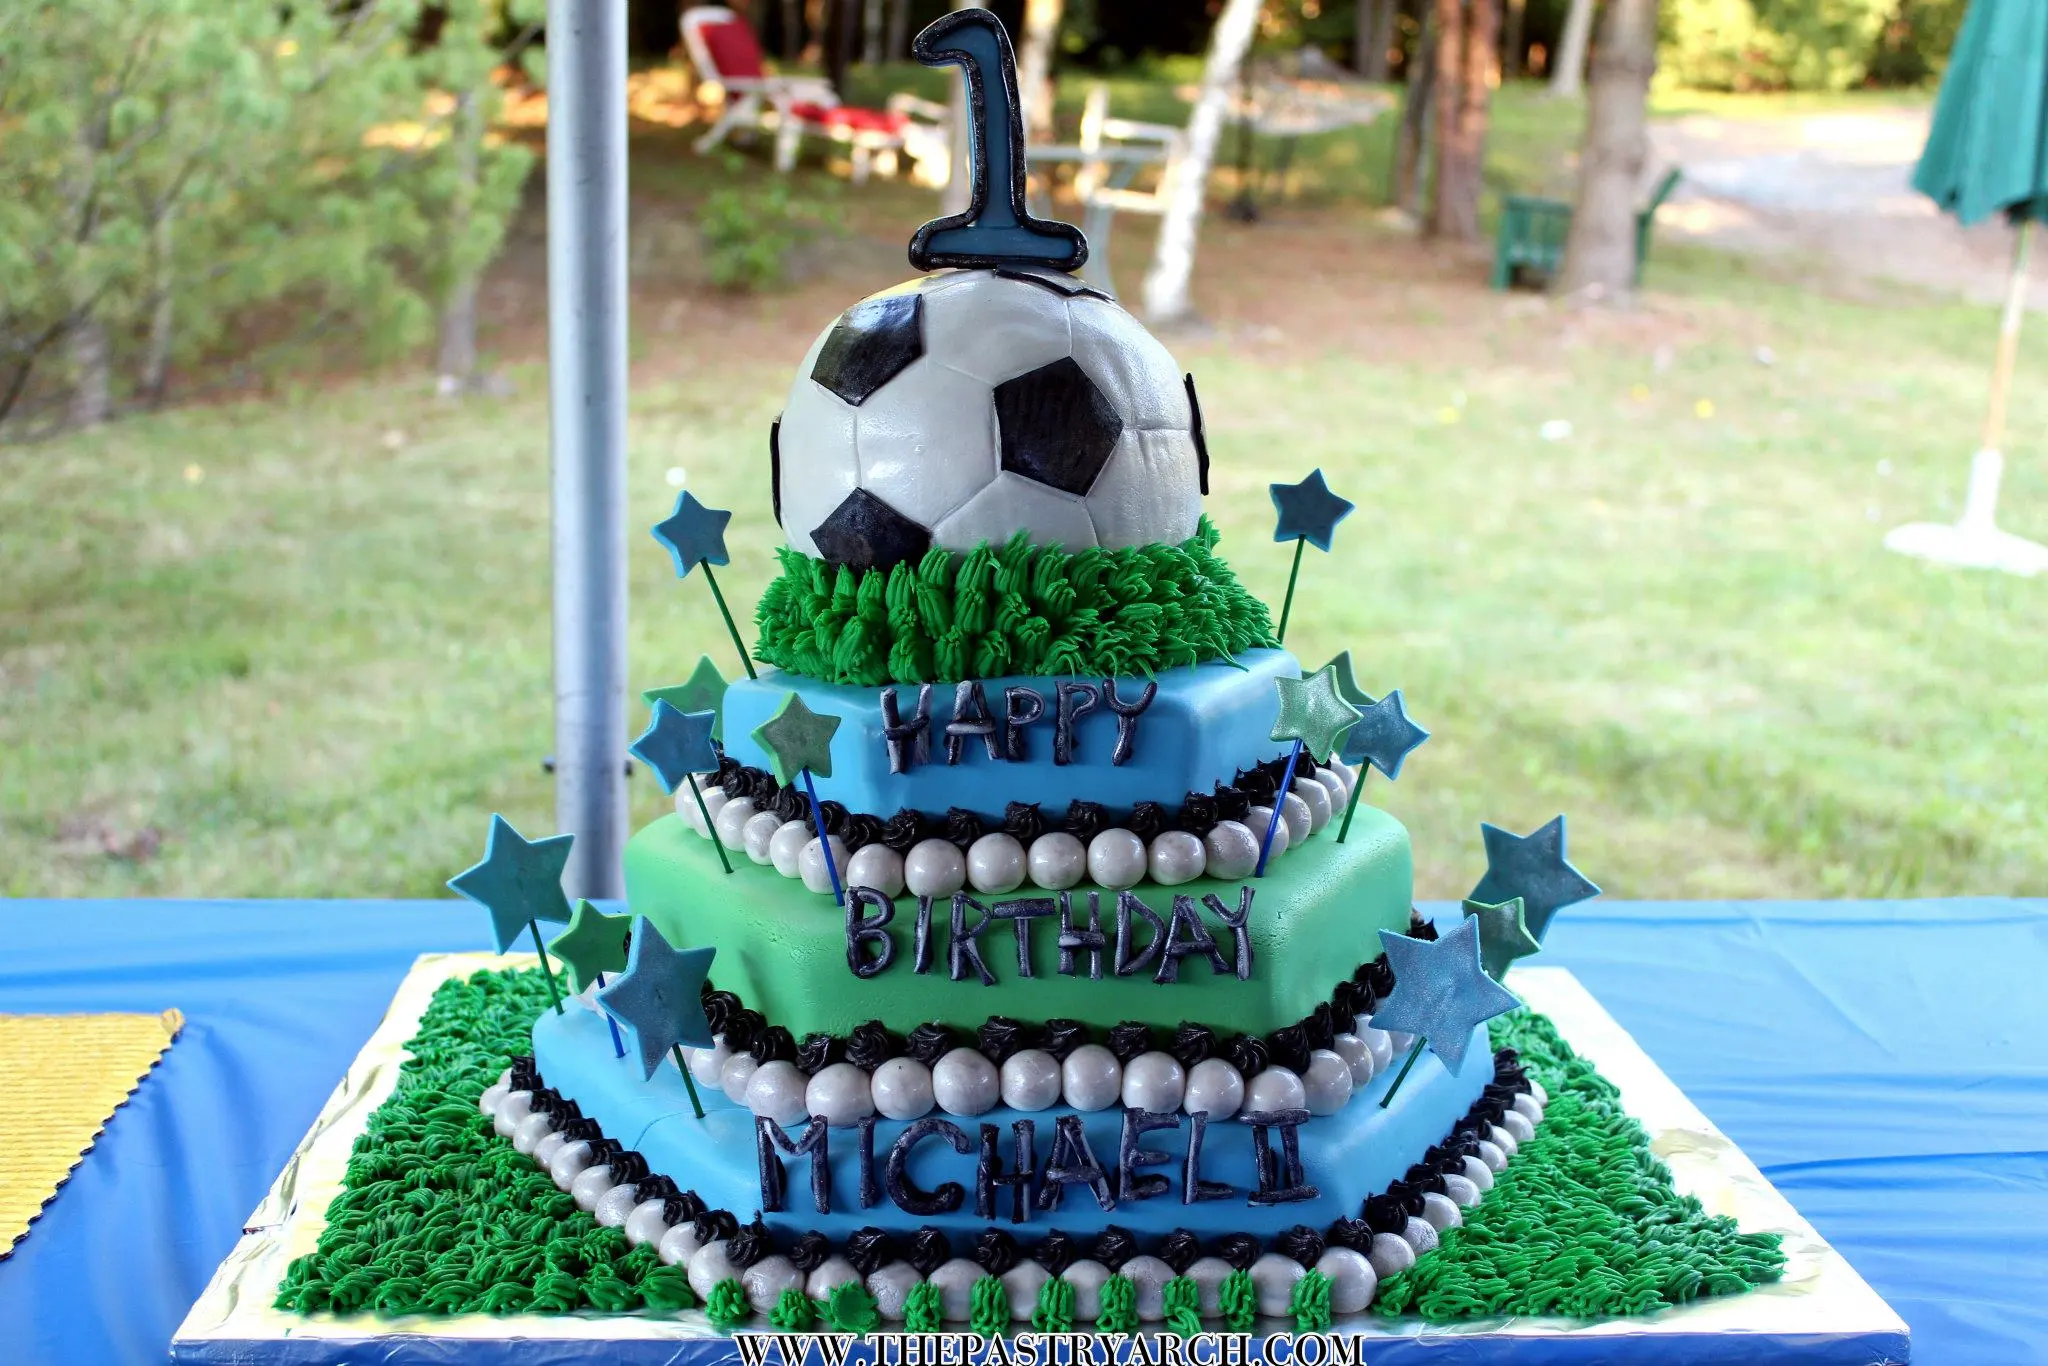 Soccer Ball Birthday Cake